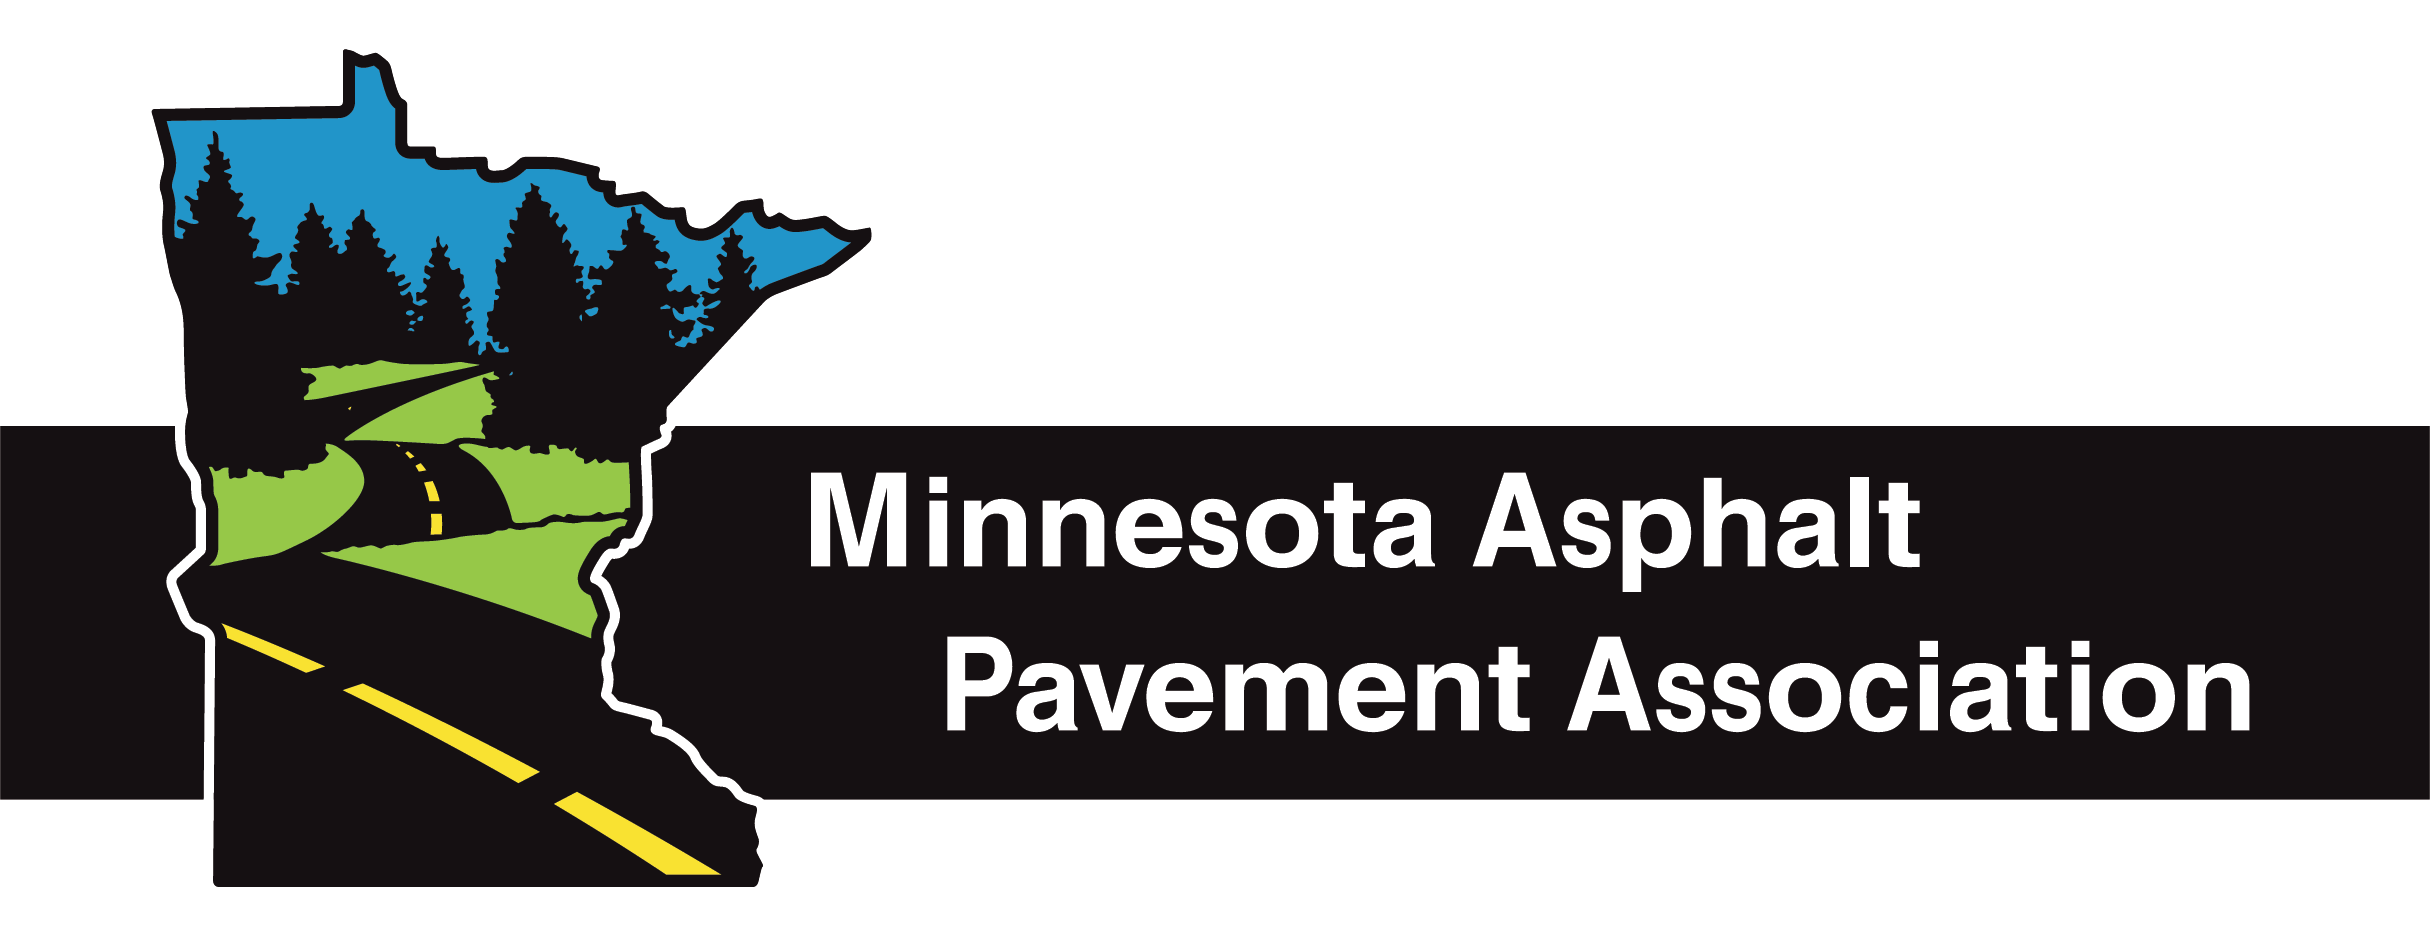 MAPA, the Minnesota Asphalt Pavement Association